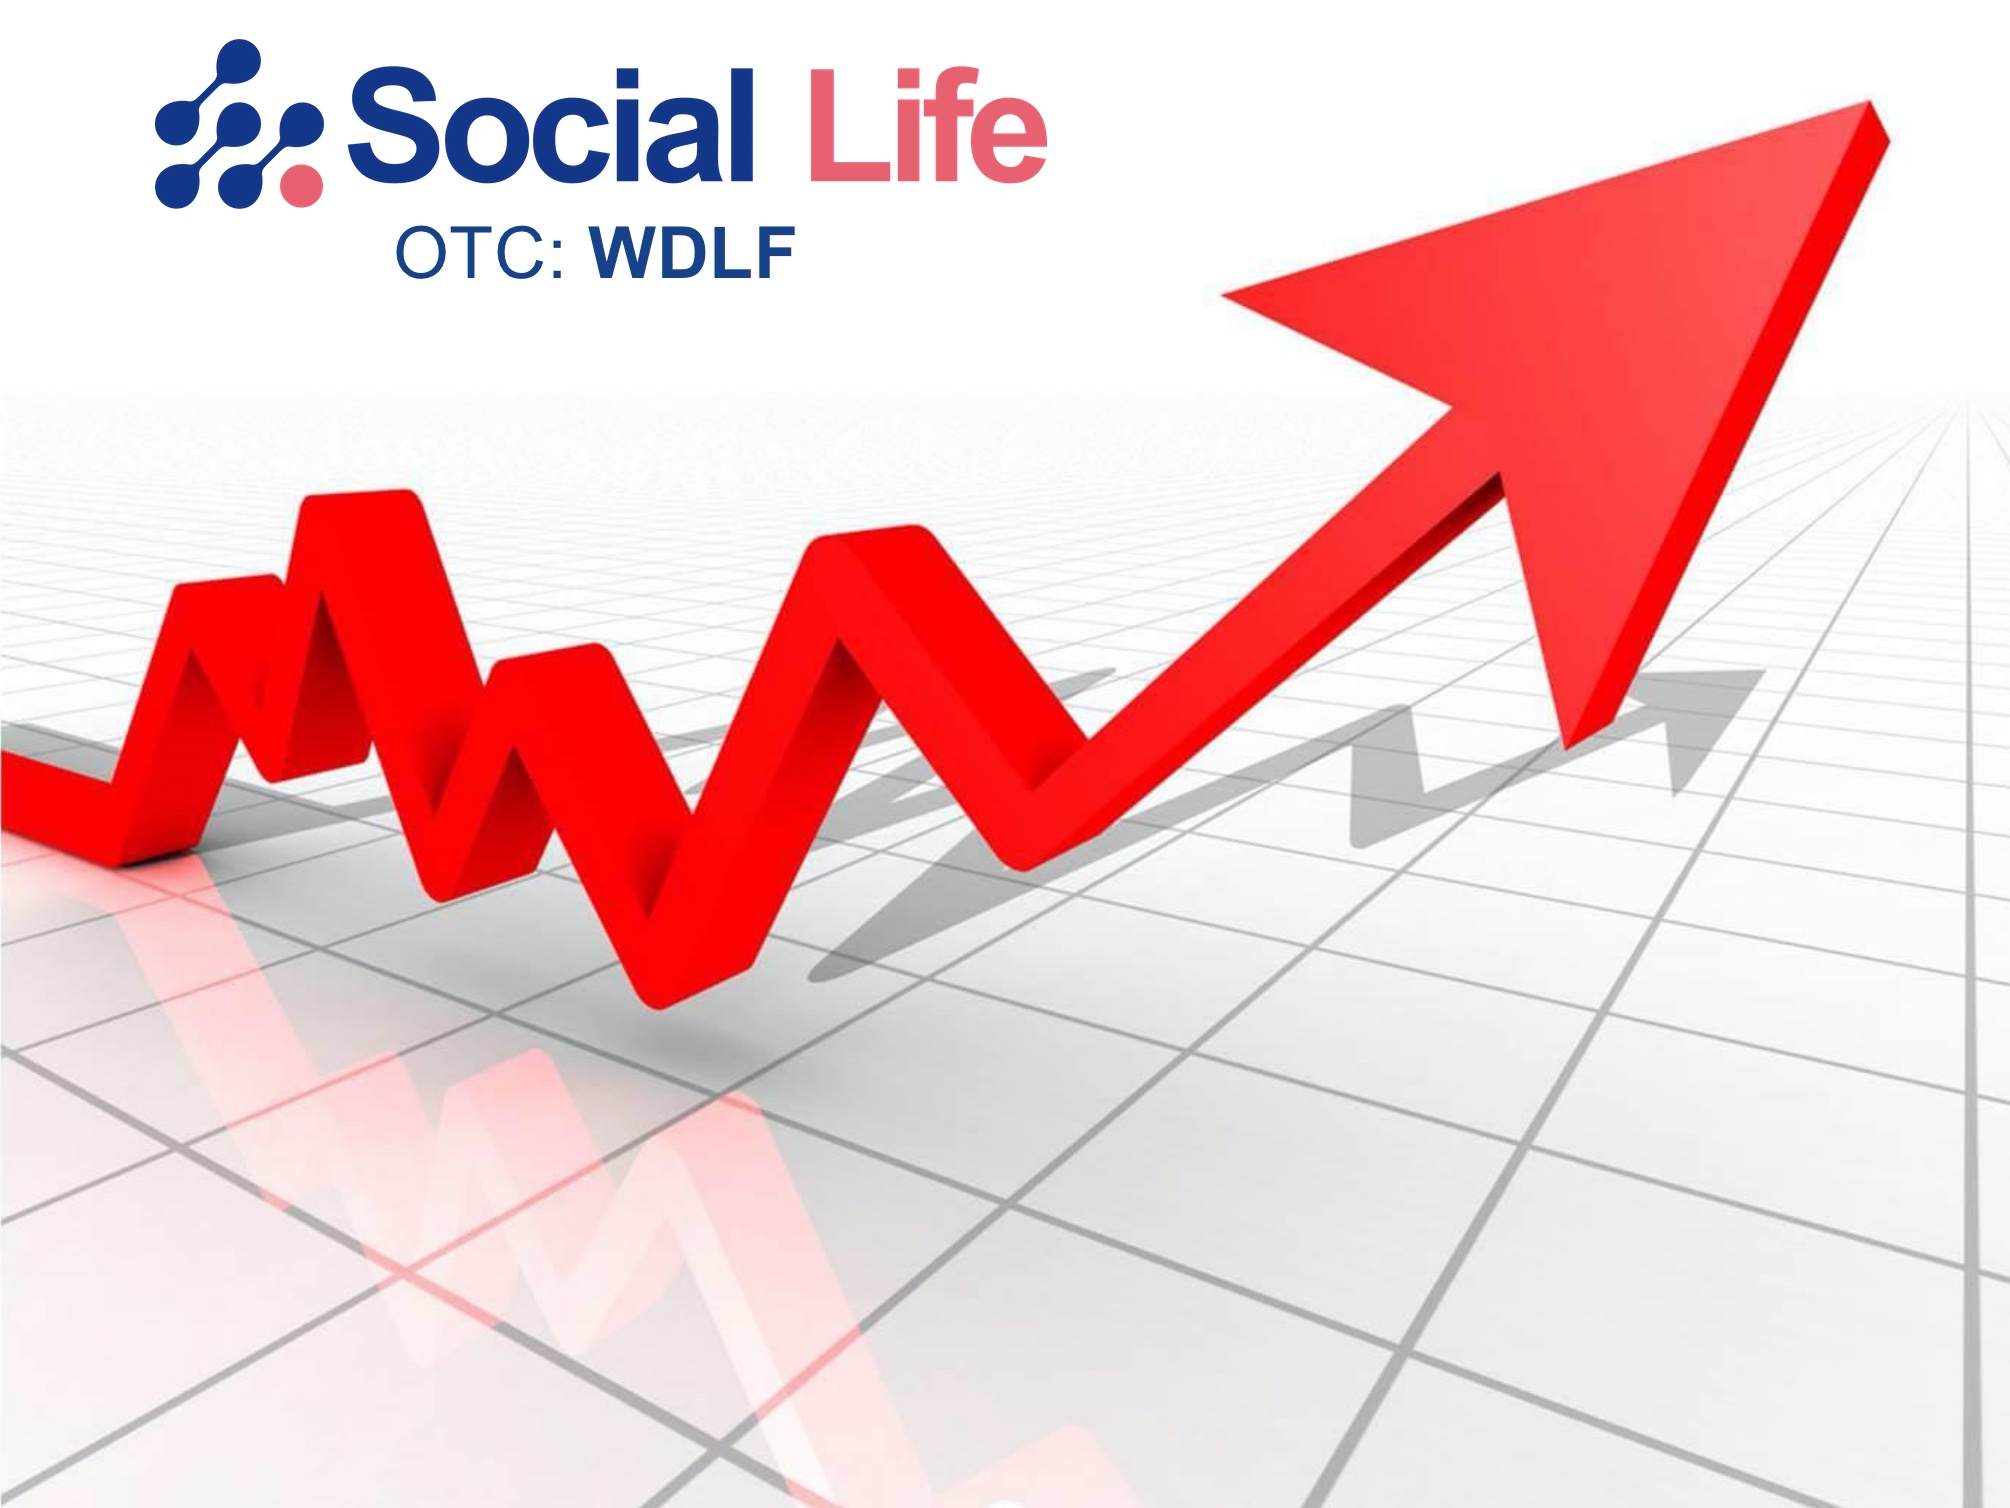 Social Life Network - OTC WDLF